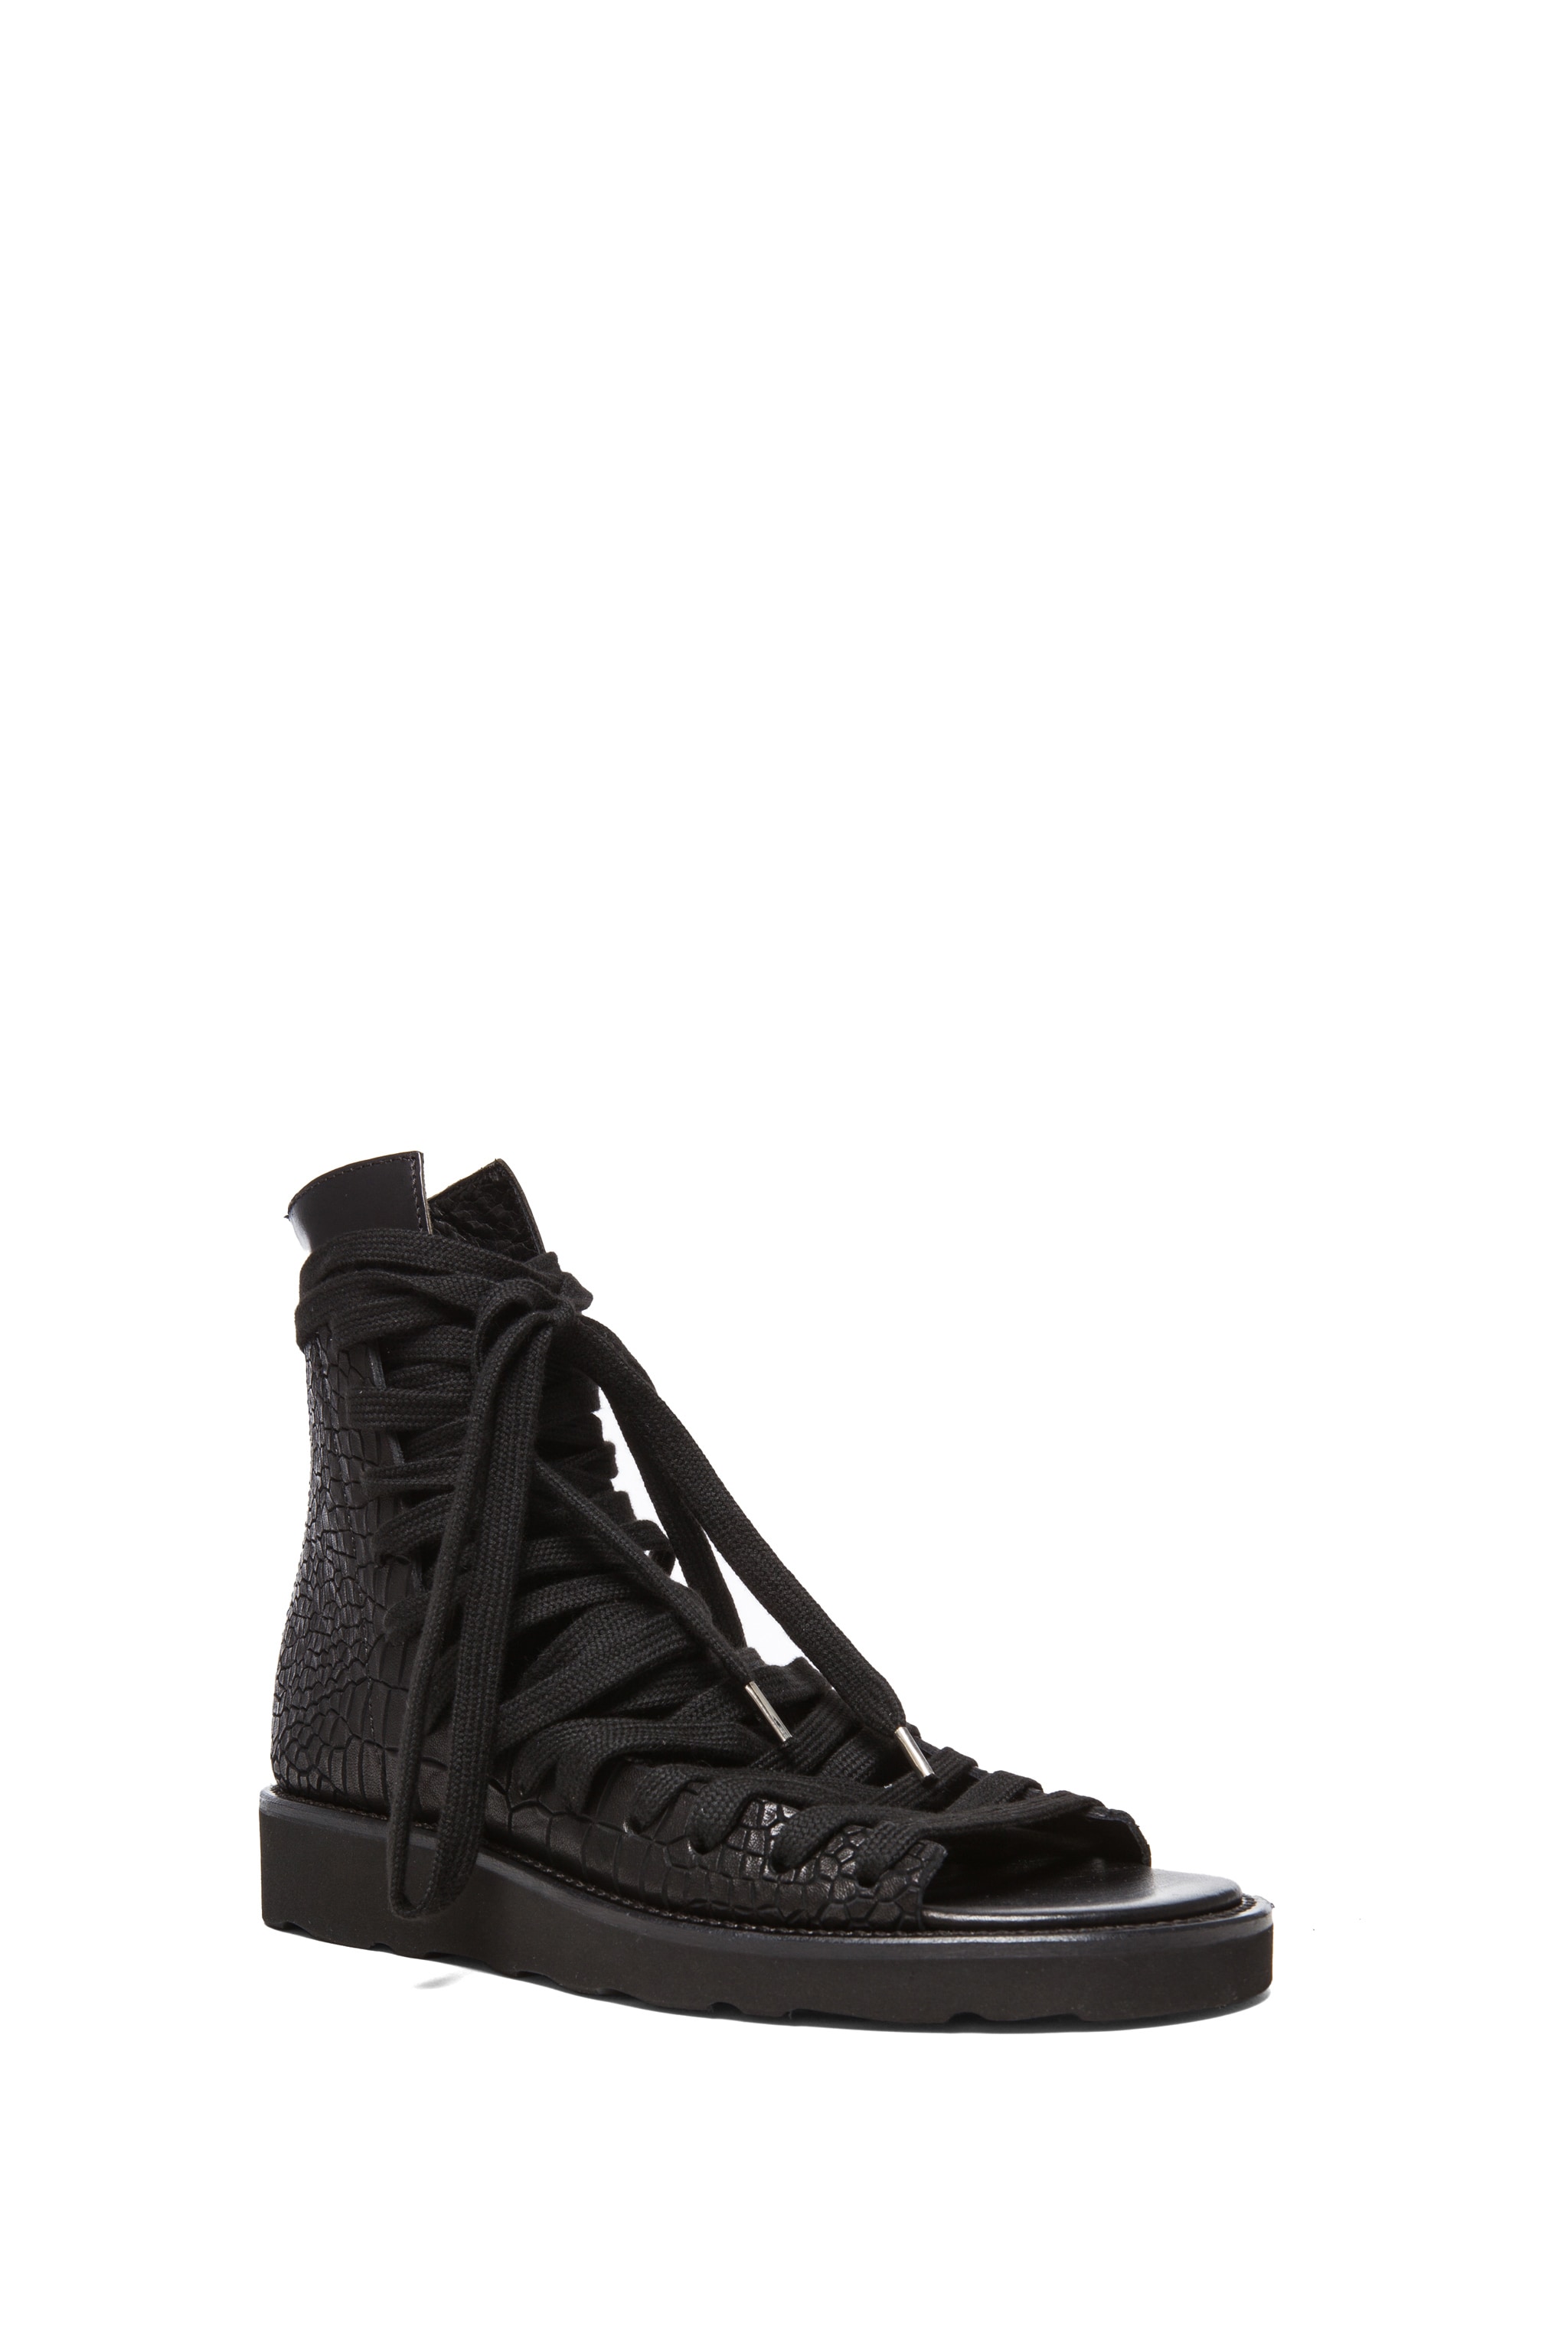 Image 1 of Kris Van Assche Multilace Crock Skin Cut Leather Sandals in Black